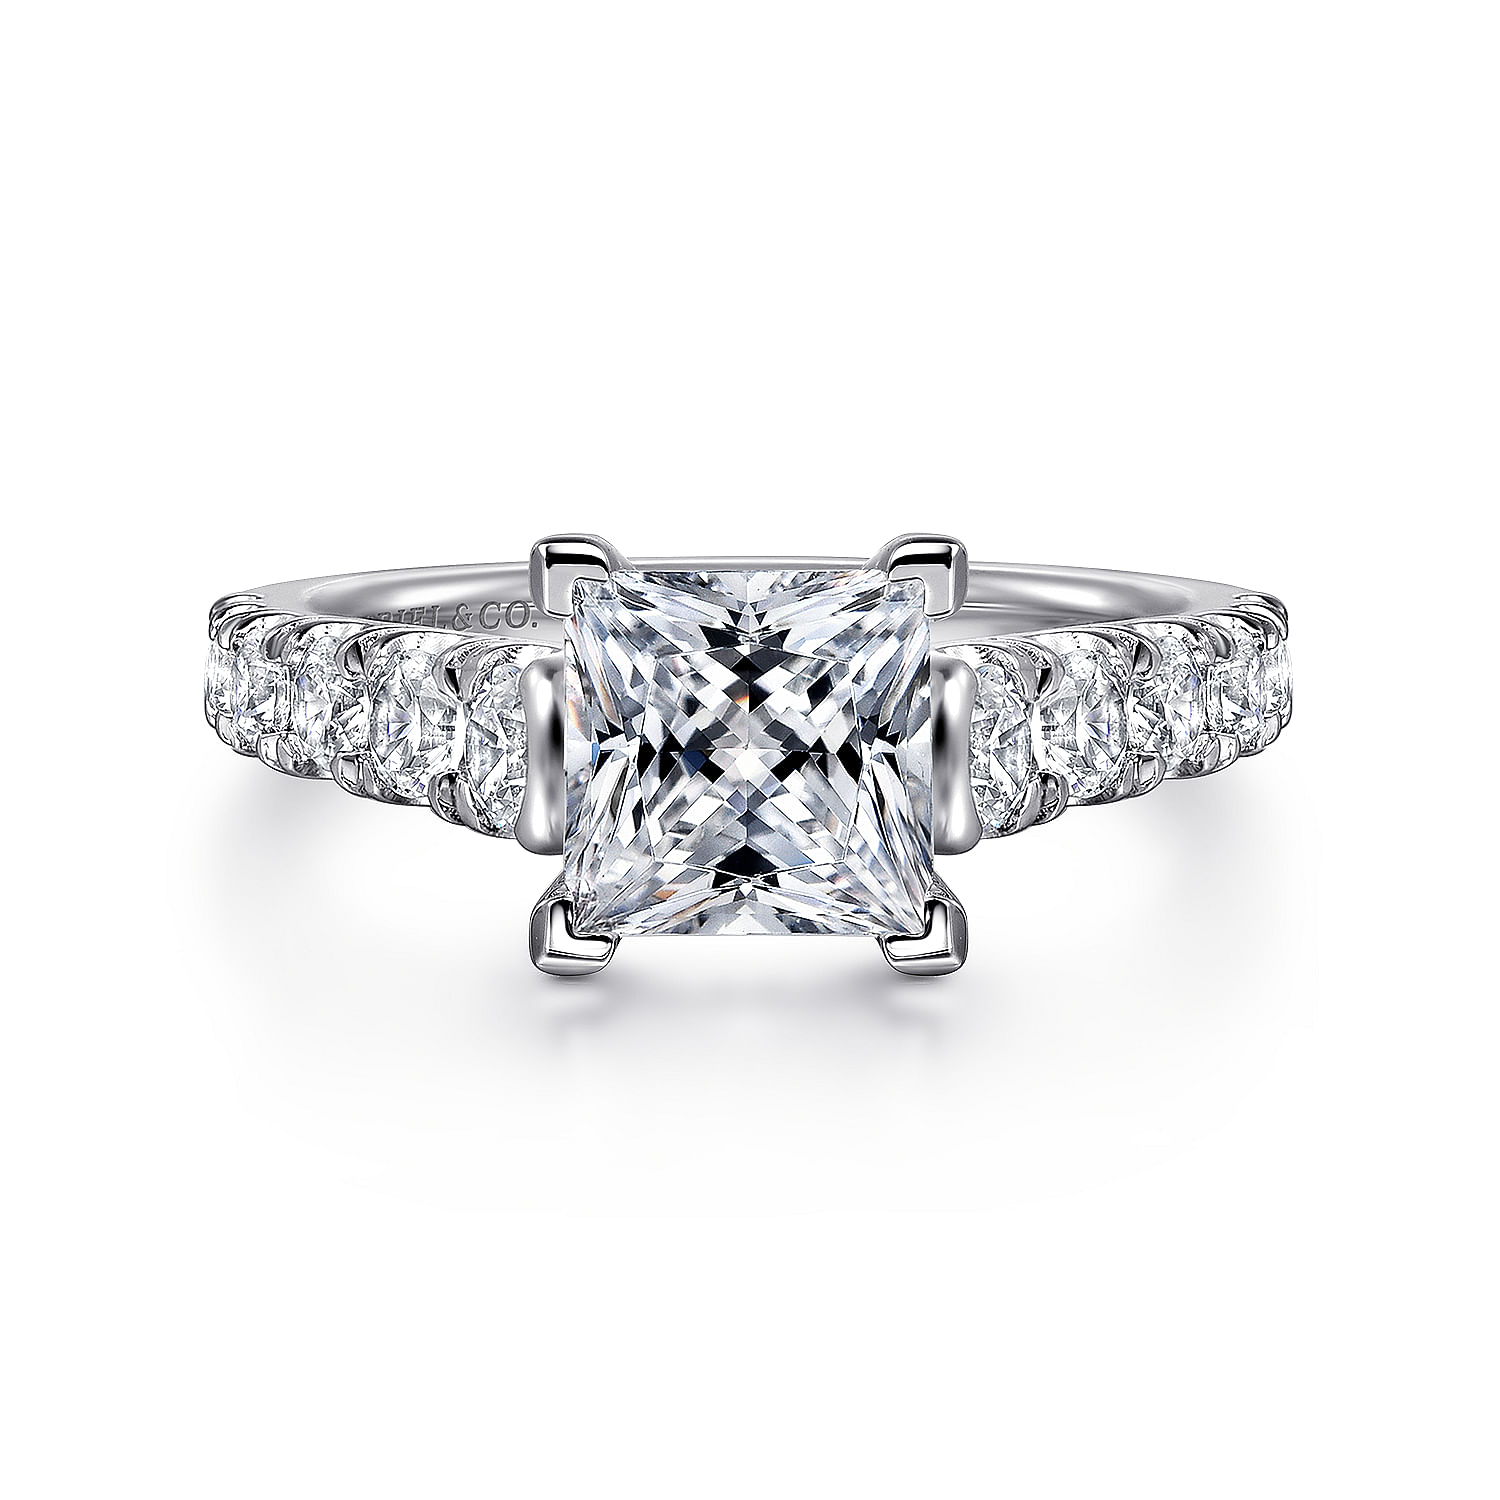 Piper---14K-White-Gold-Princess-Cut-Diamond-Engagement-Ring1